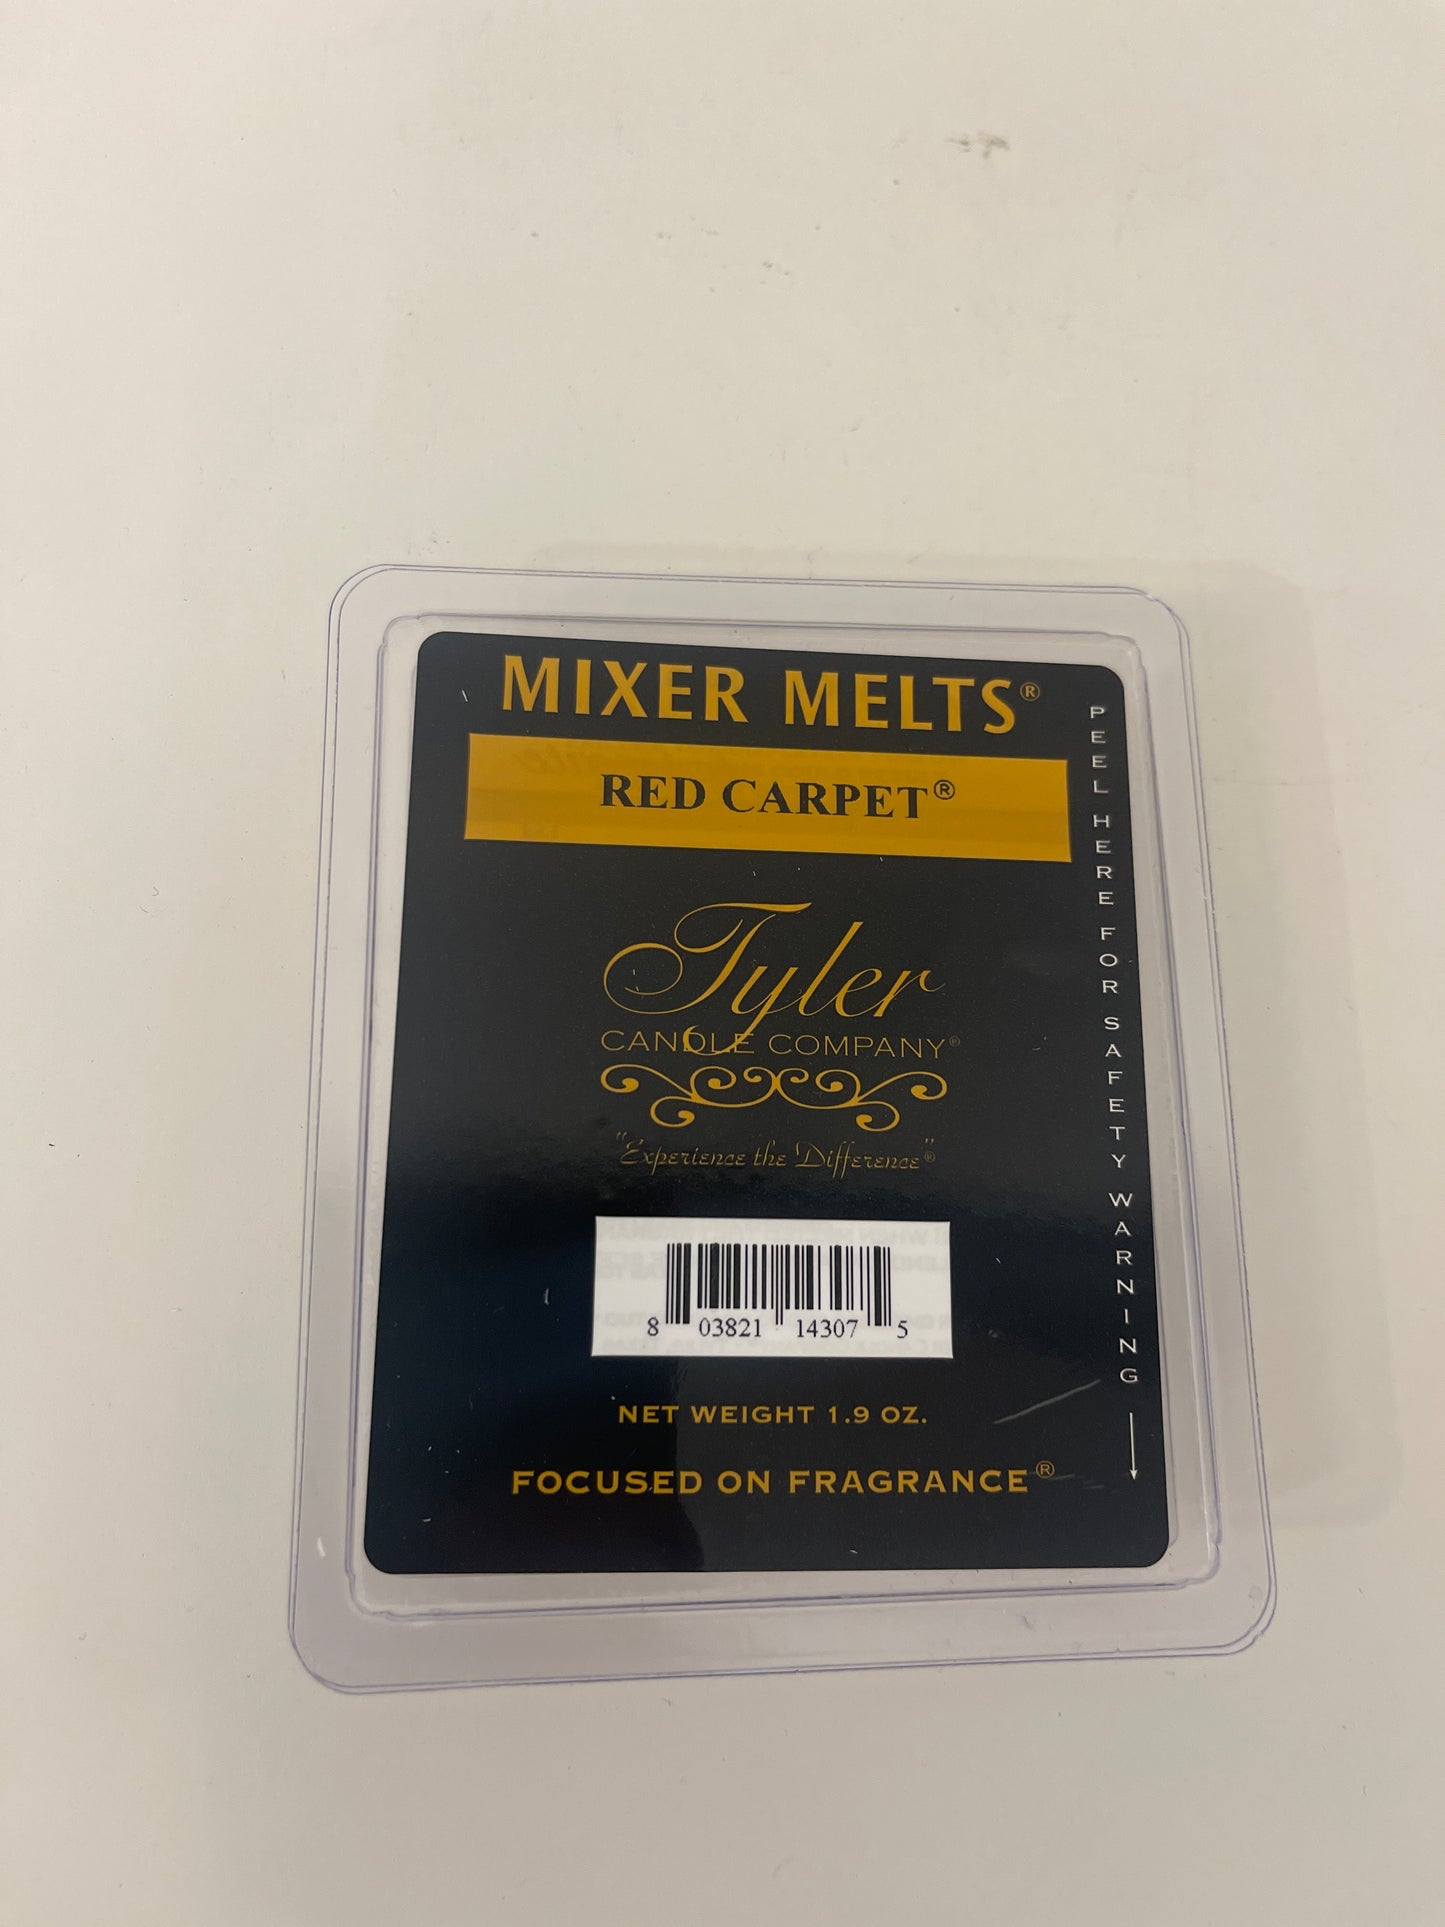 Red Carpet Mixer Melts